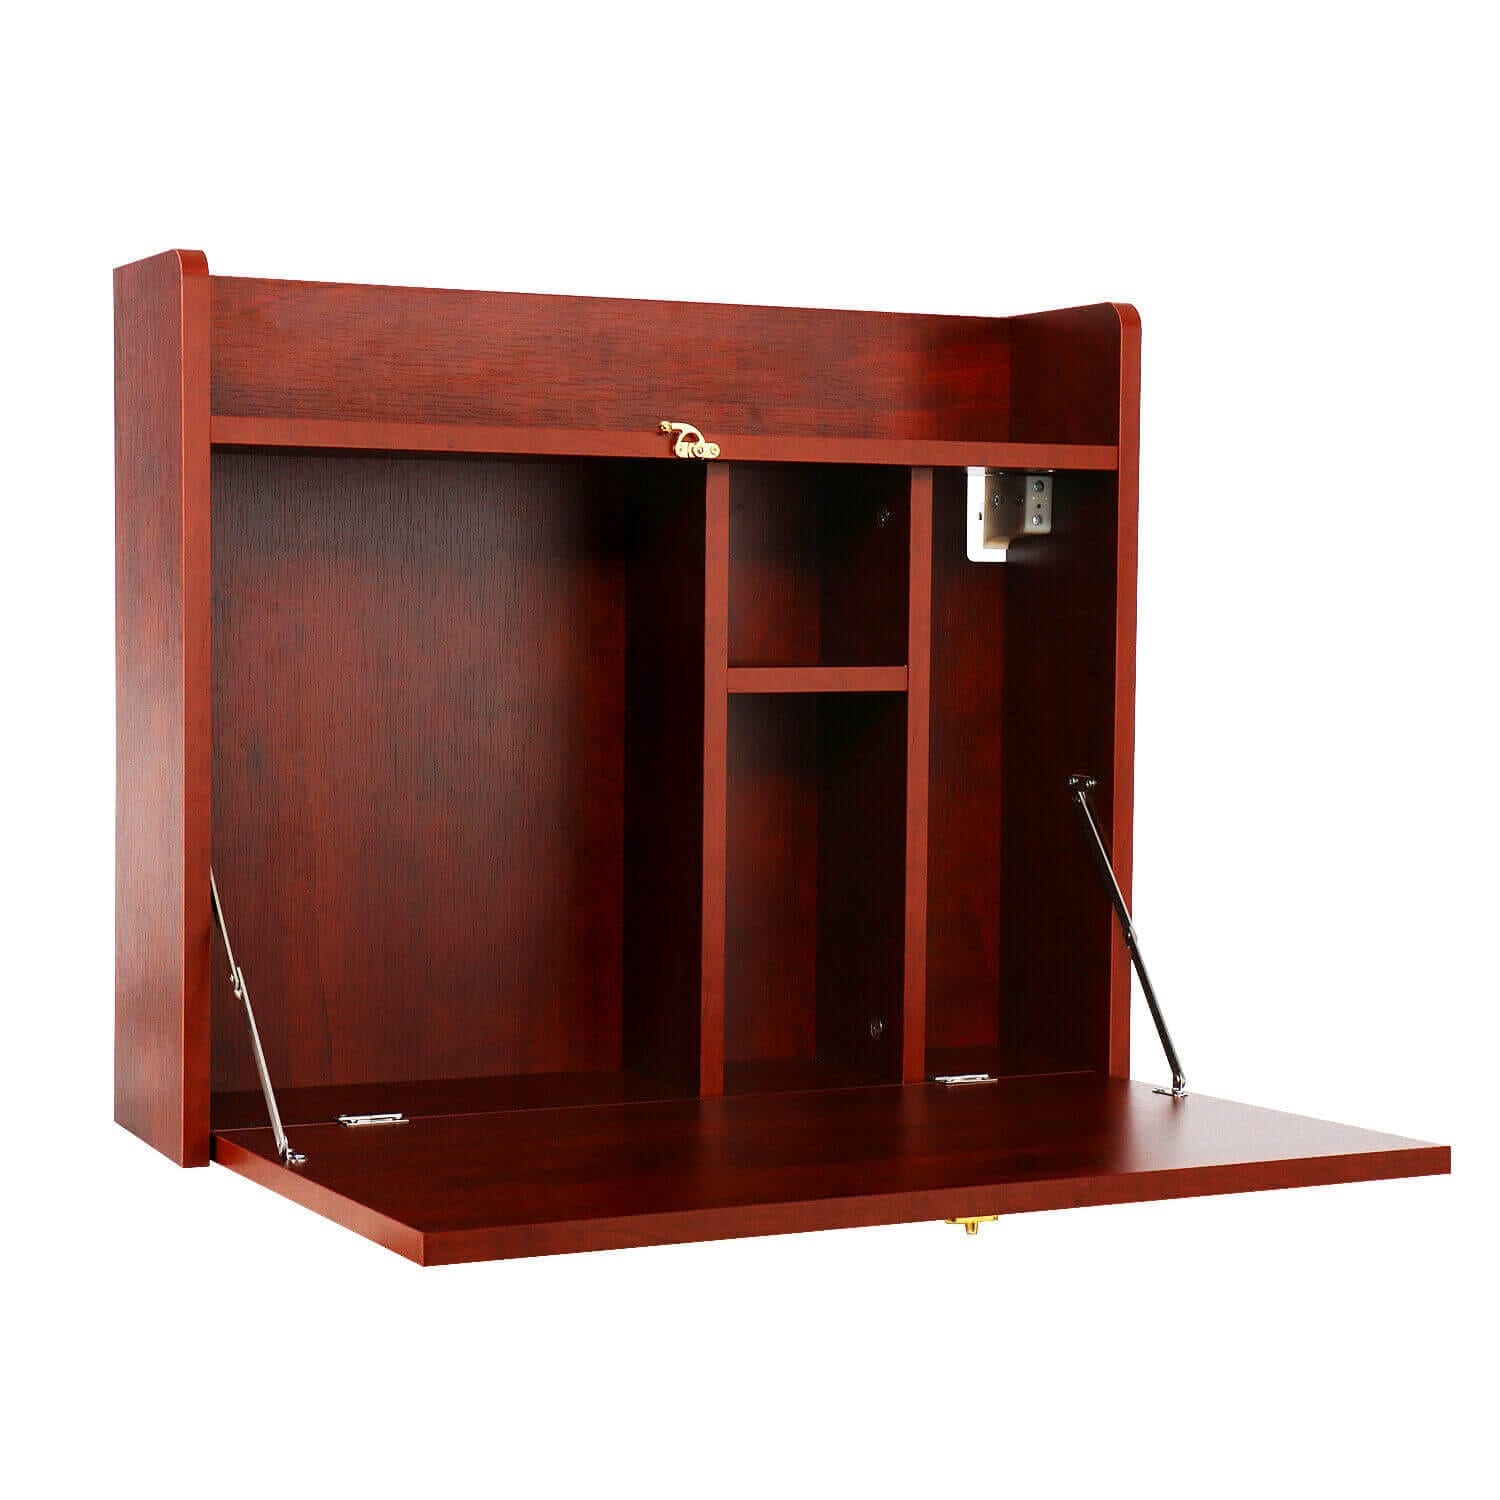 Elecwish Wall Mounted Table Foldable Storage Shelf Wall-Mounted Desk HW1138 open status